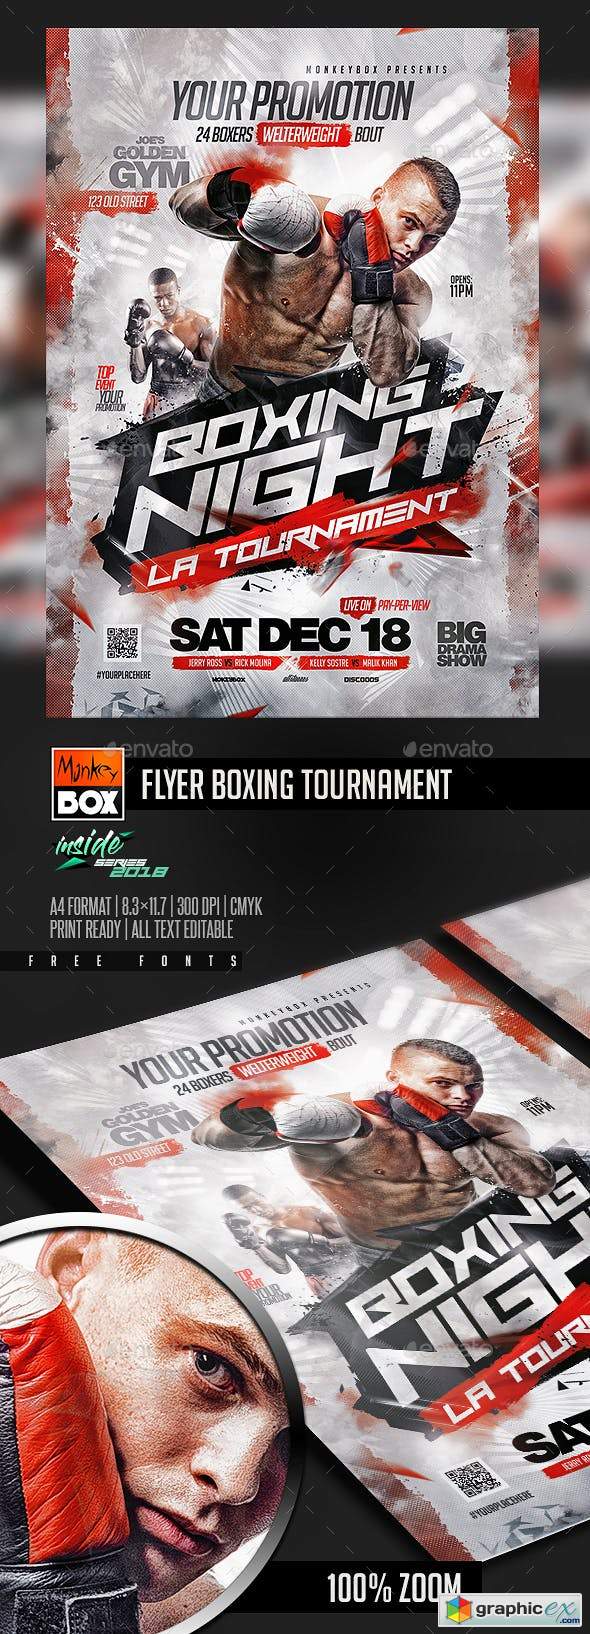 Flyer Boxing Tournament